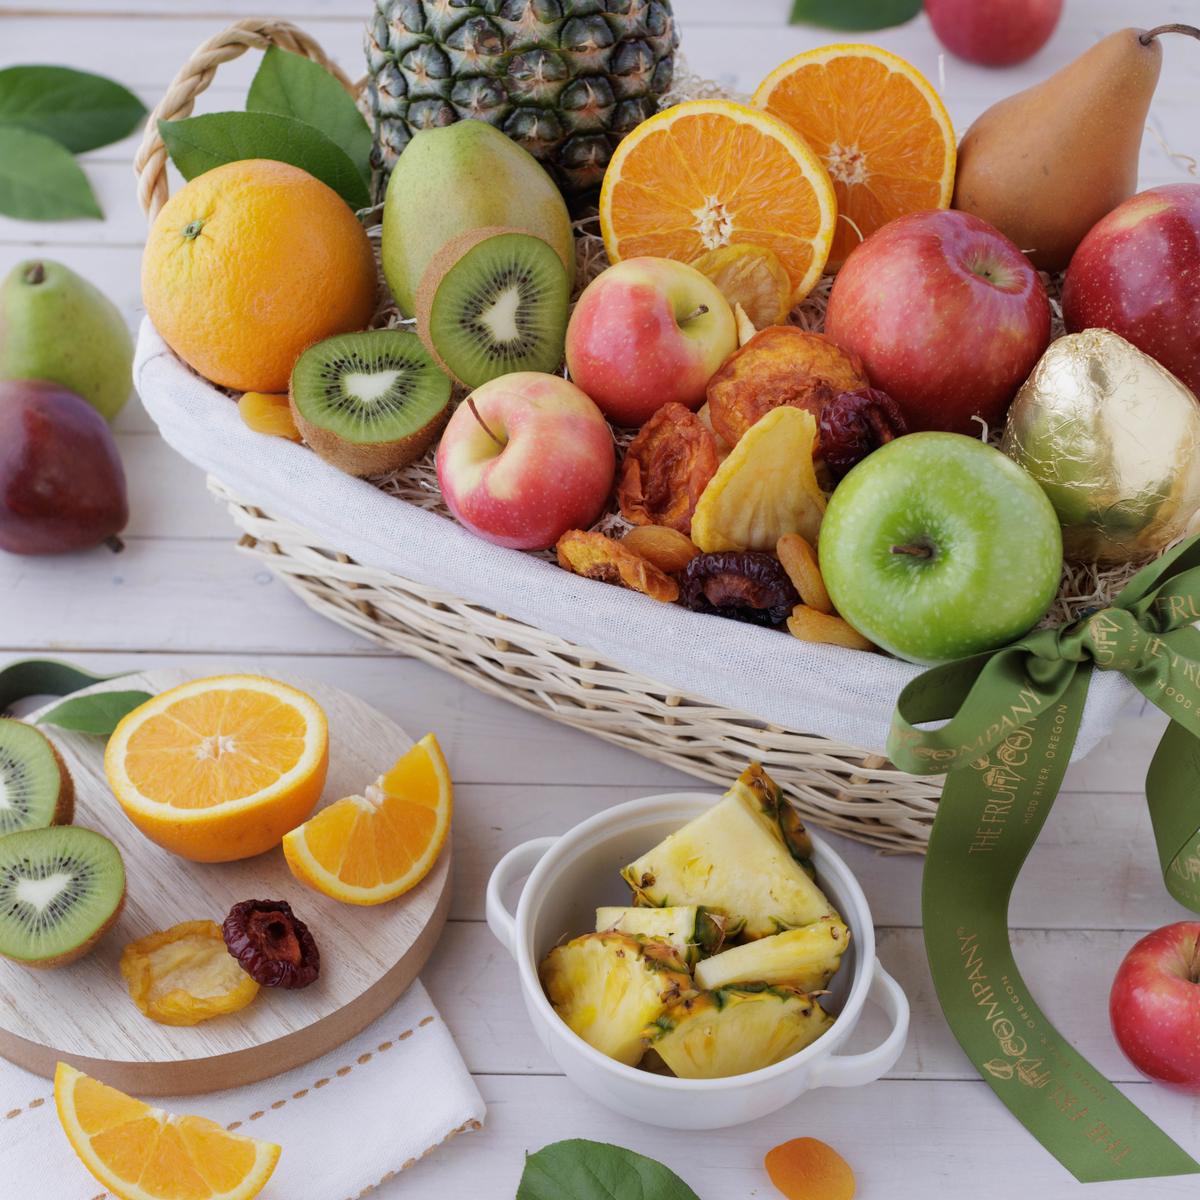 Simply Fruit Basket  The Fruit Company®